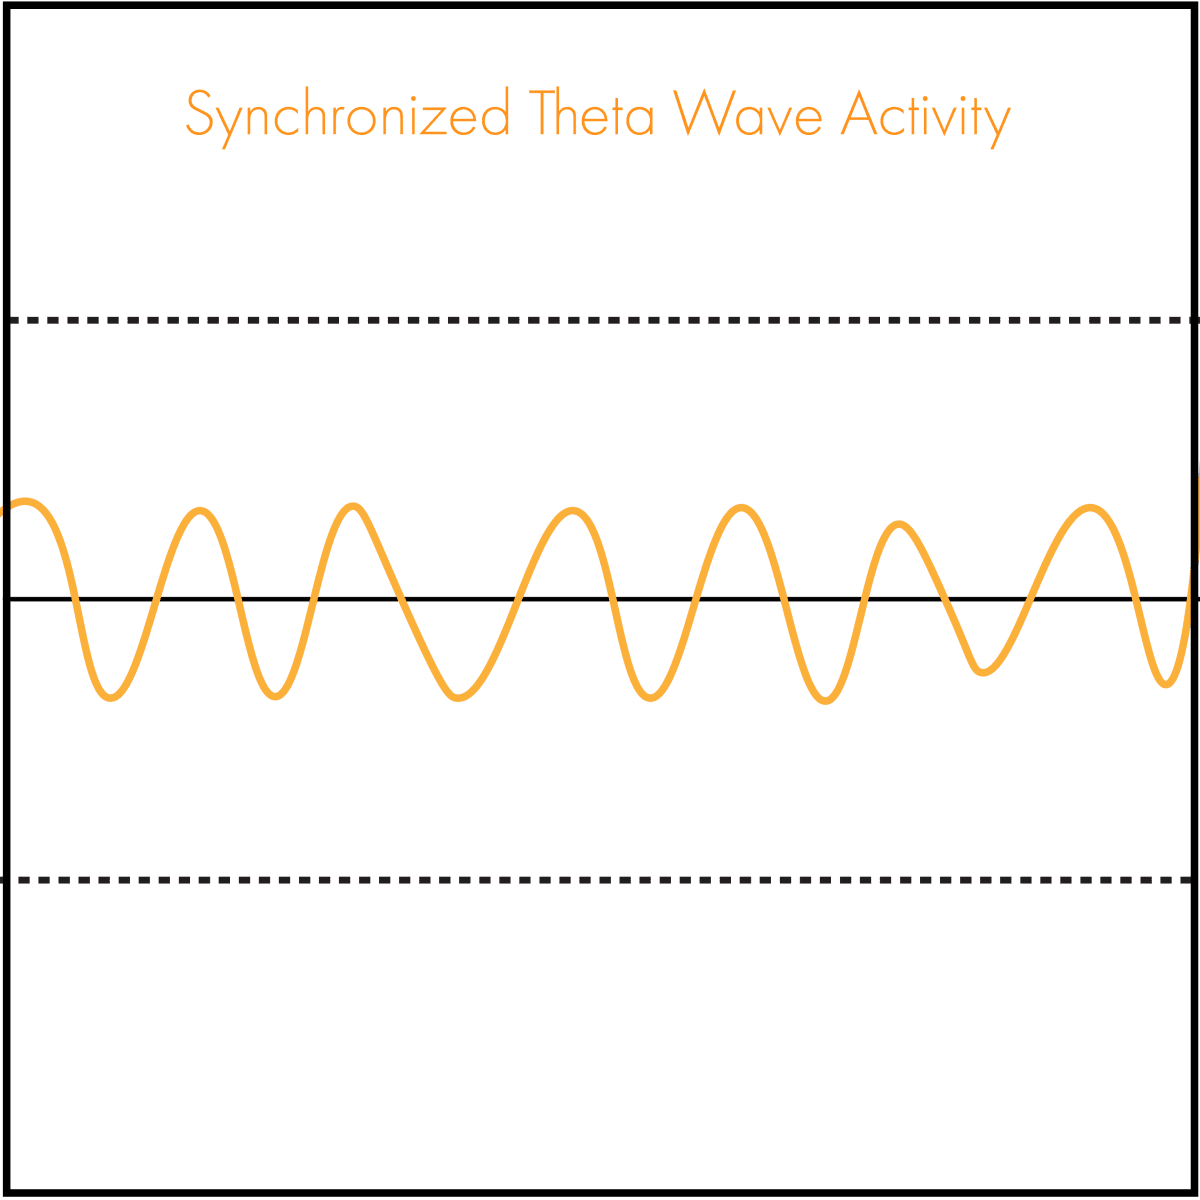 theta waves